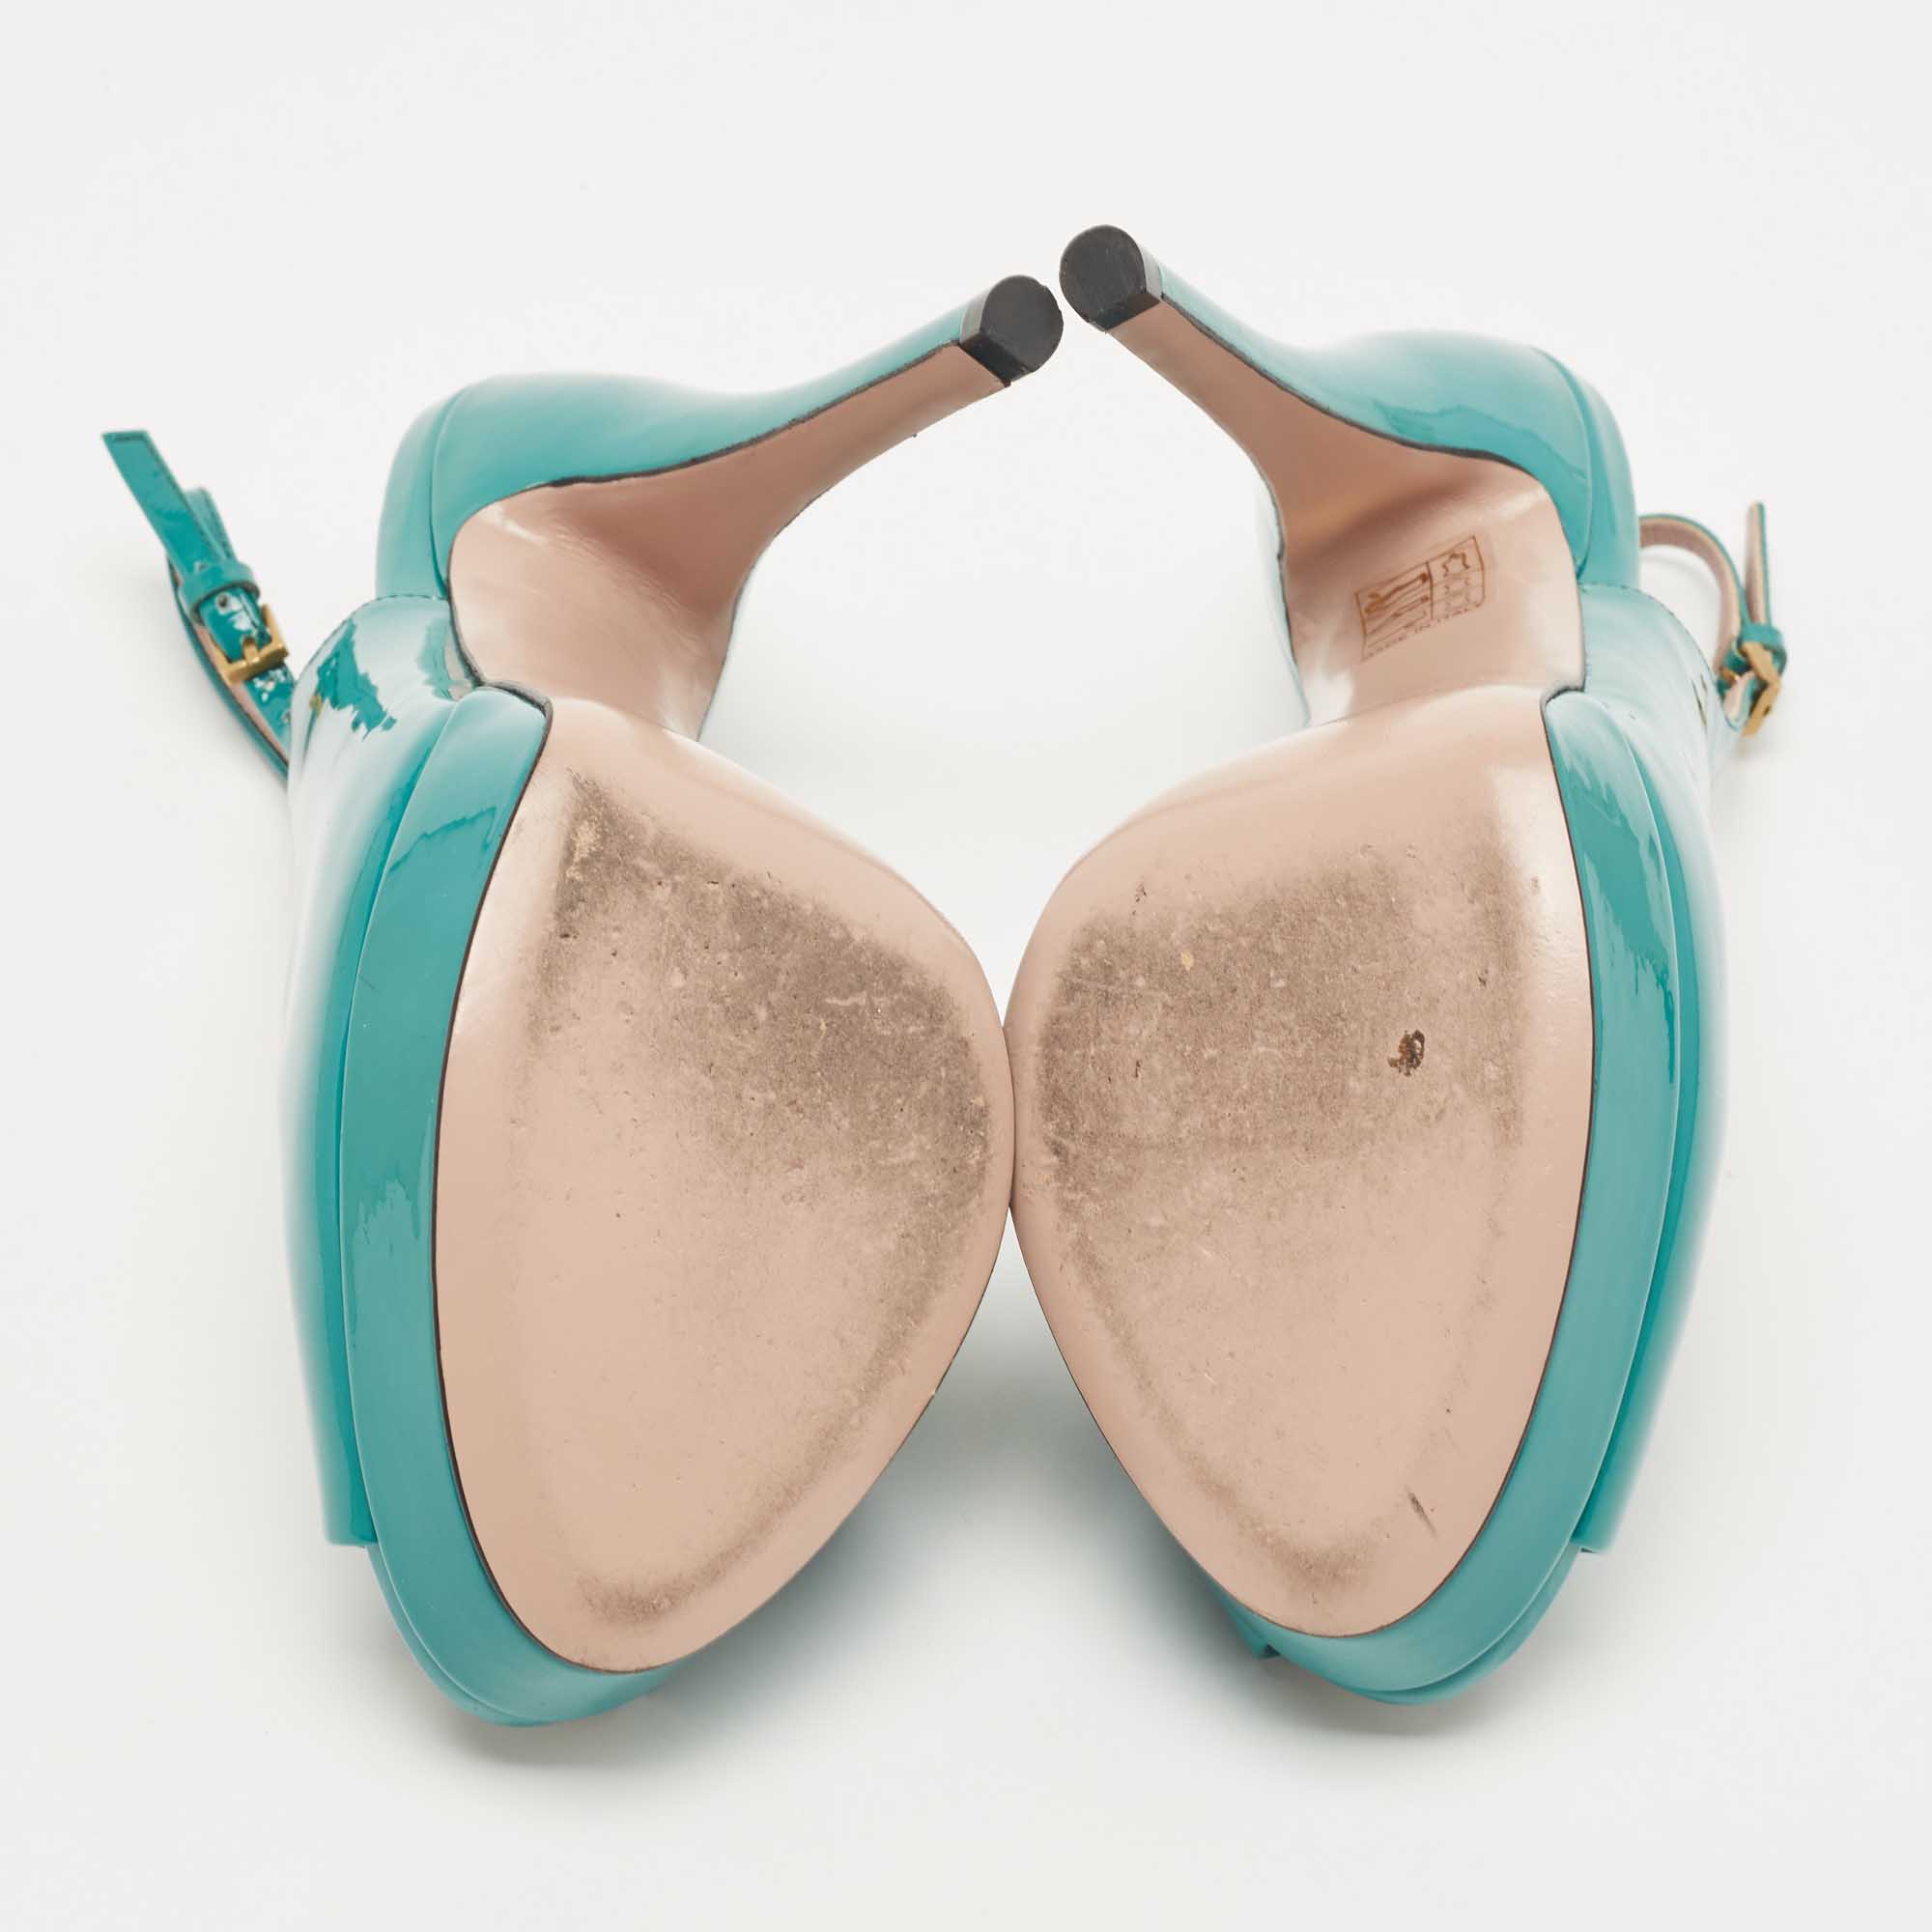 Gucci Teal Patent Leather Peep Toe Platform Slingback Pumps Size 37